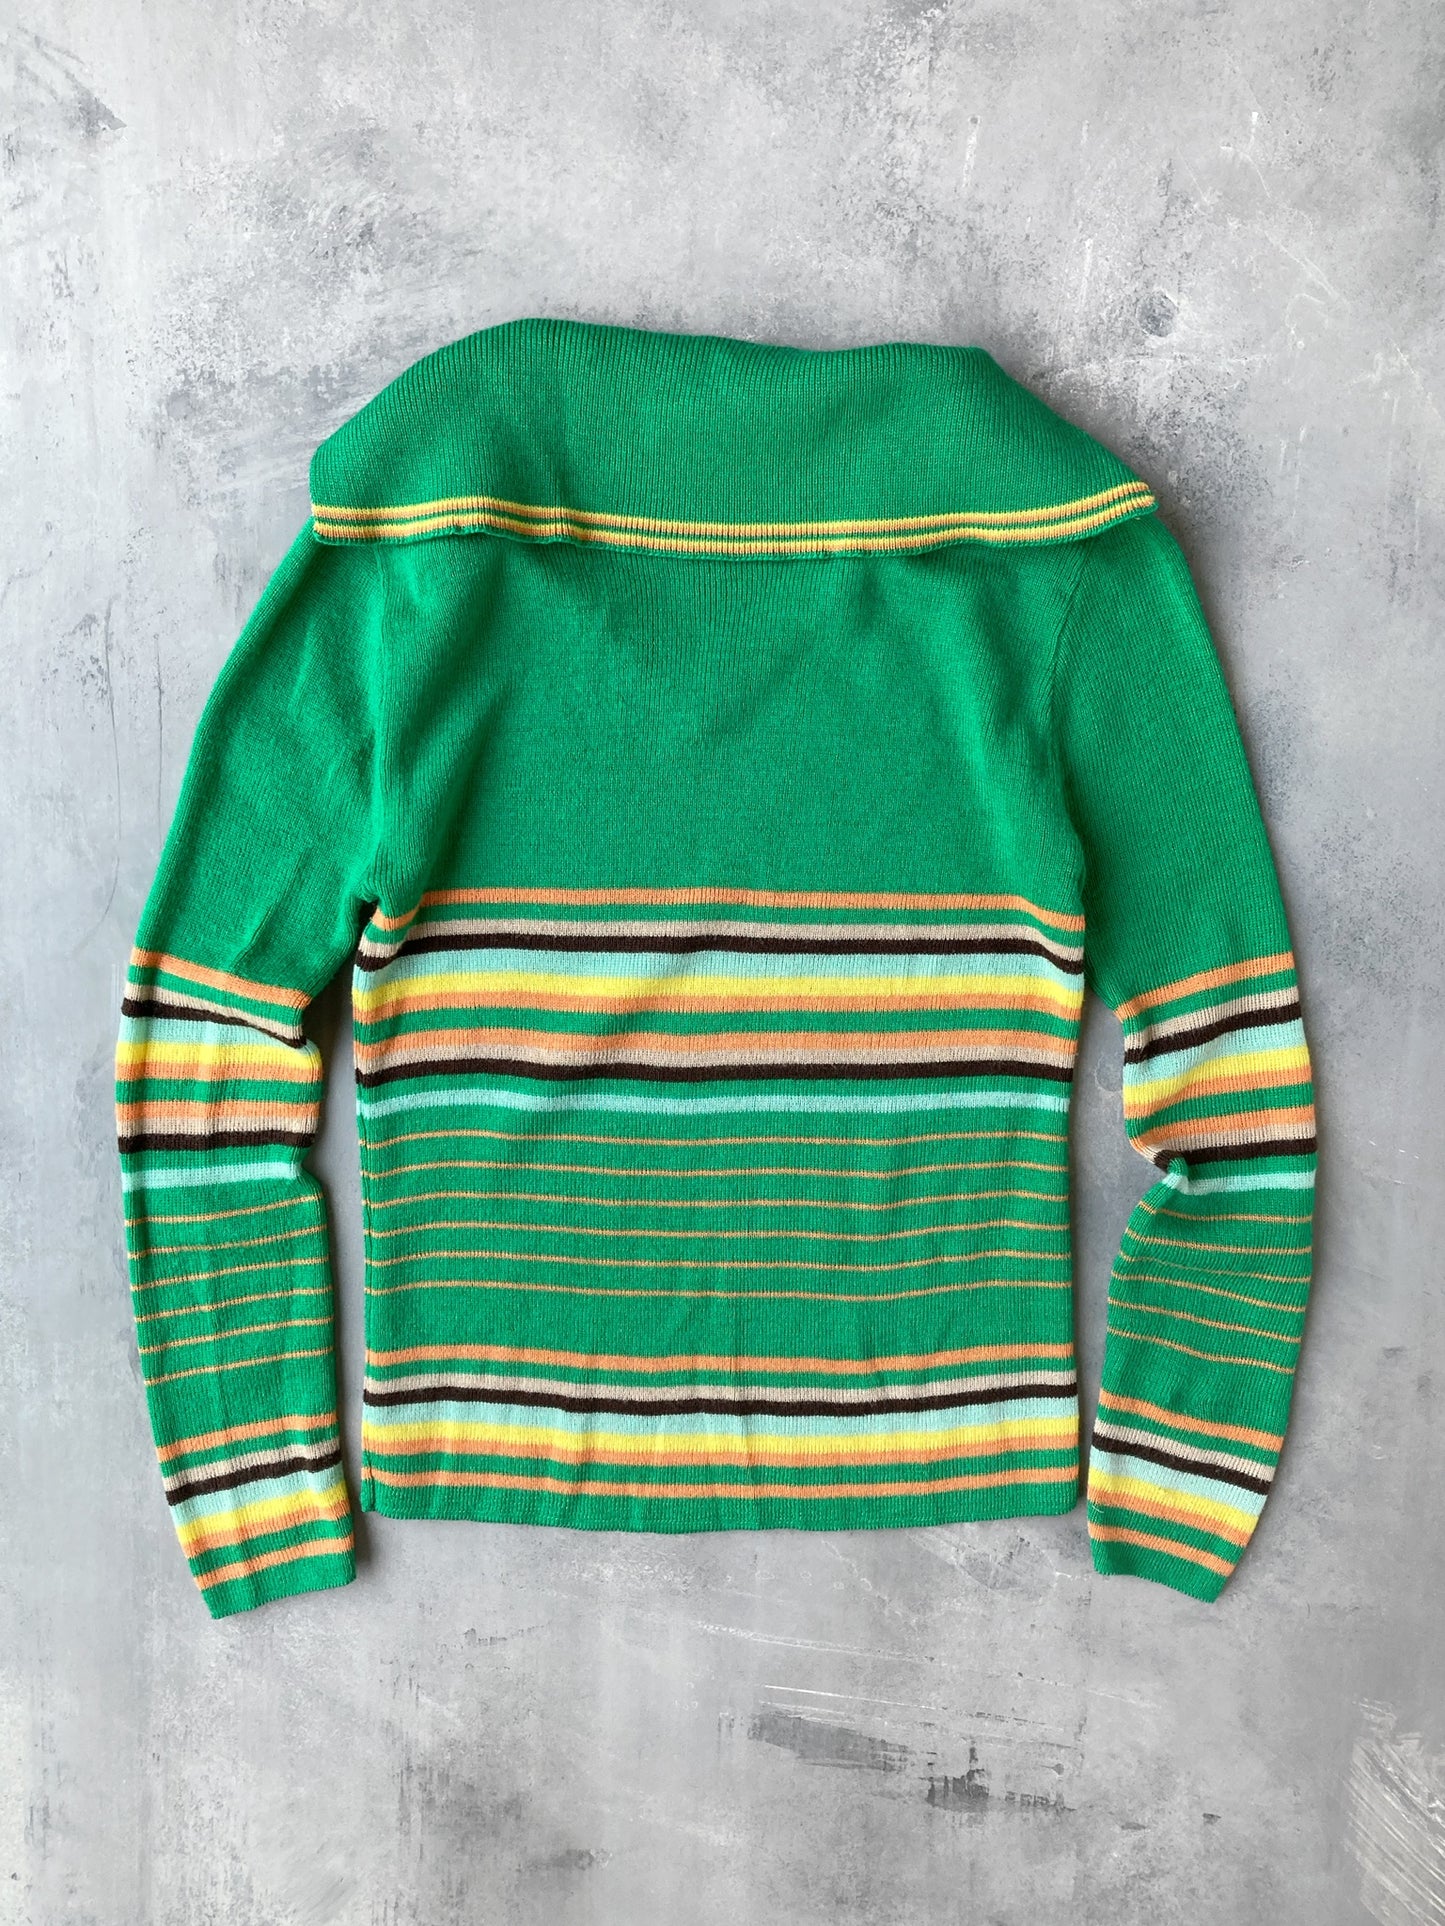 Collared Striped Sweater 70's - Small